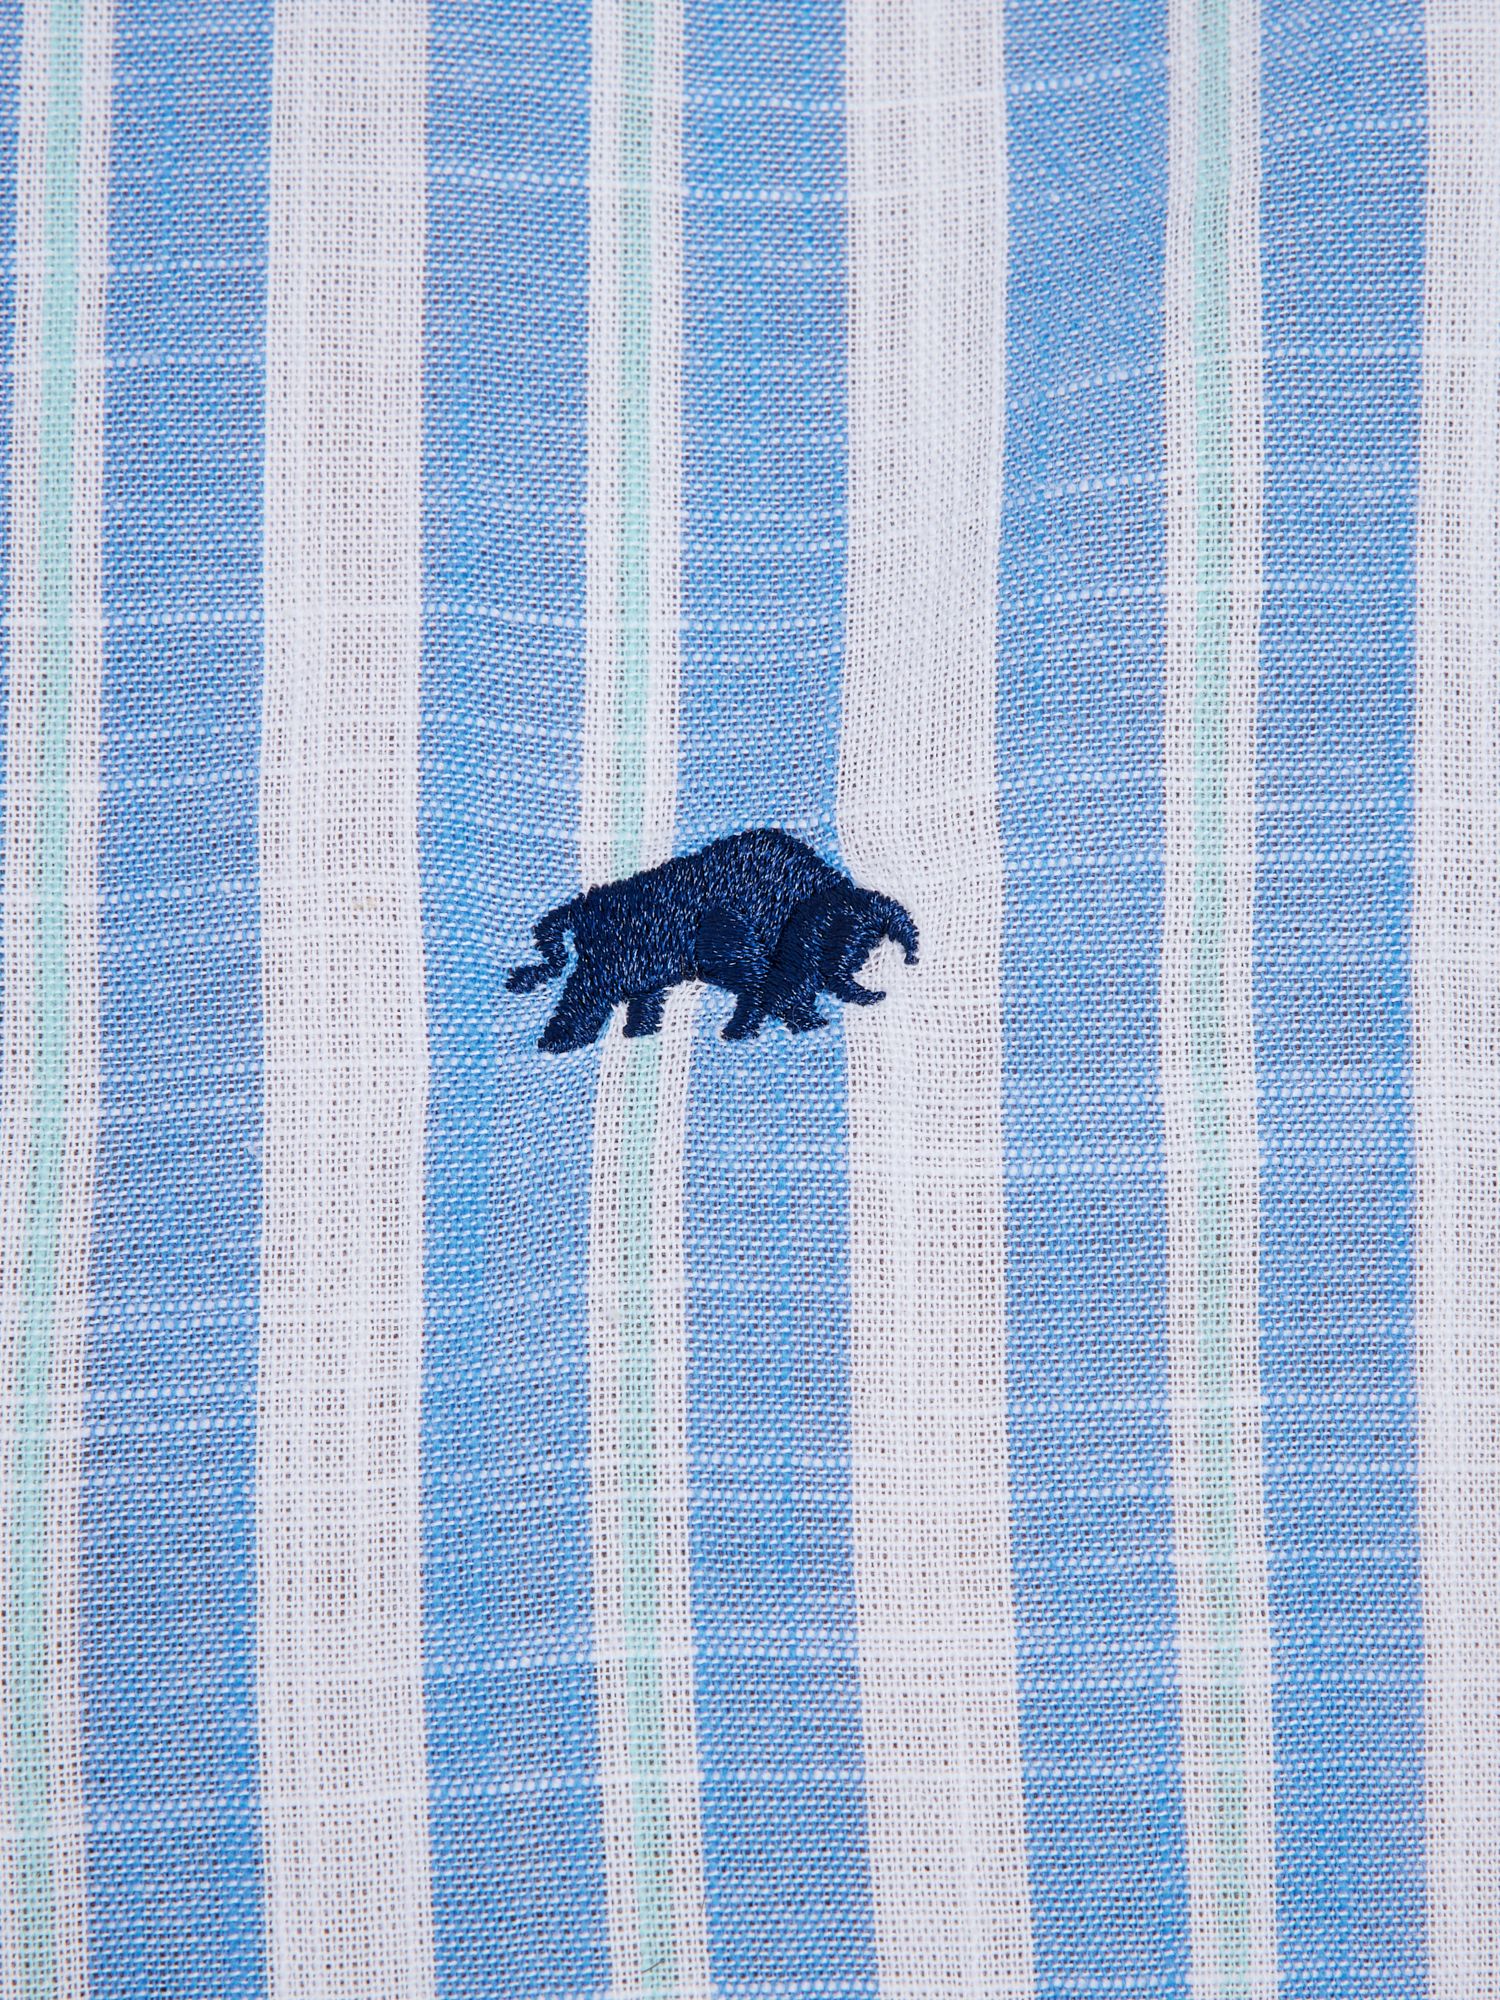 Buy Raging Bull Short Sleeve Multi Stripe Linen Look Shirt, Mid Blue Online at johnlewis.com